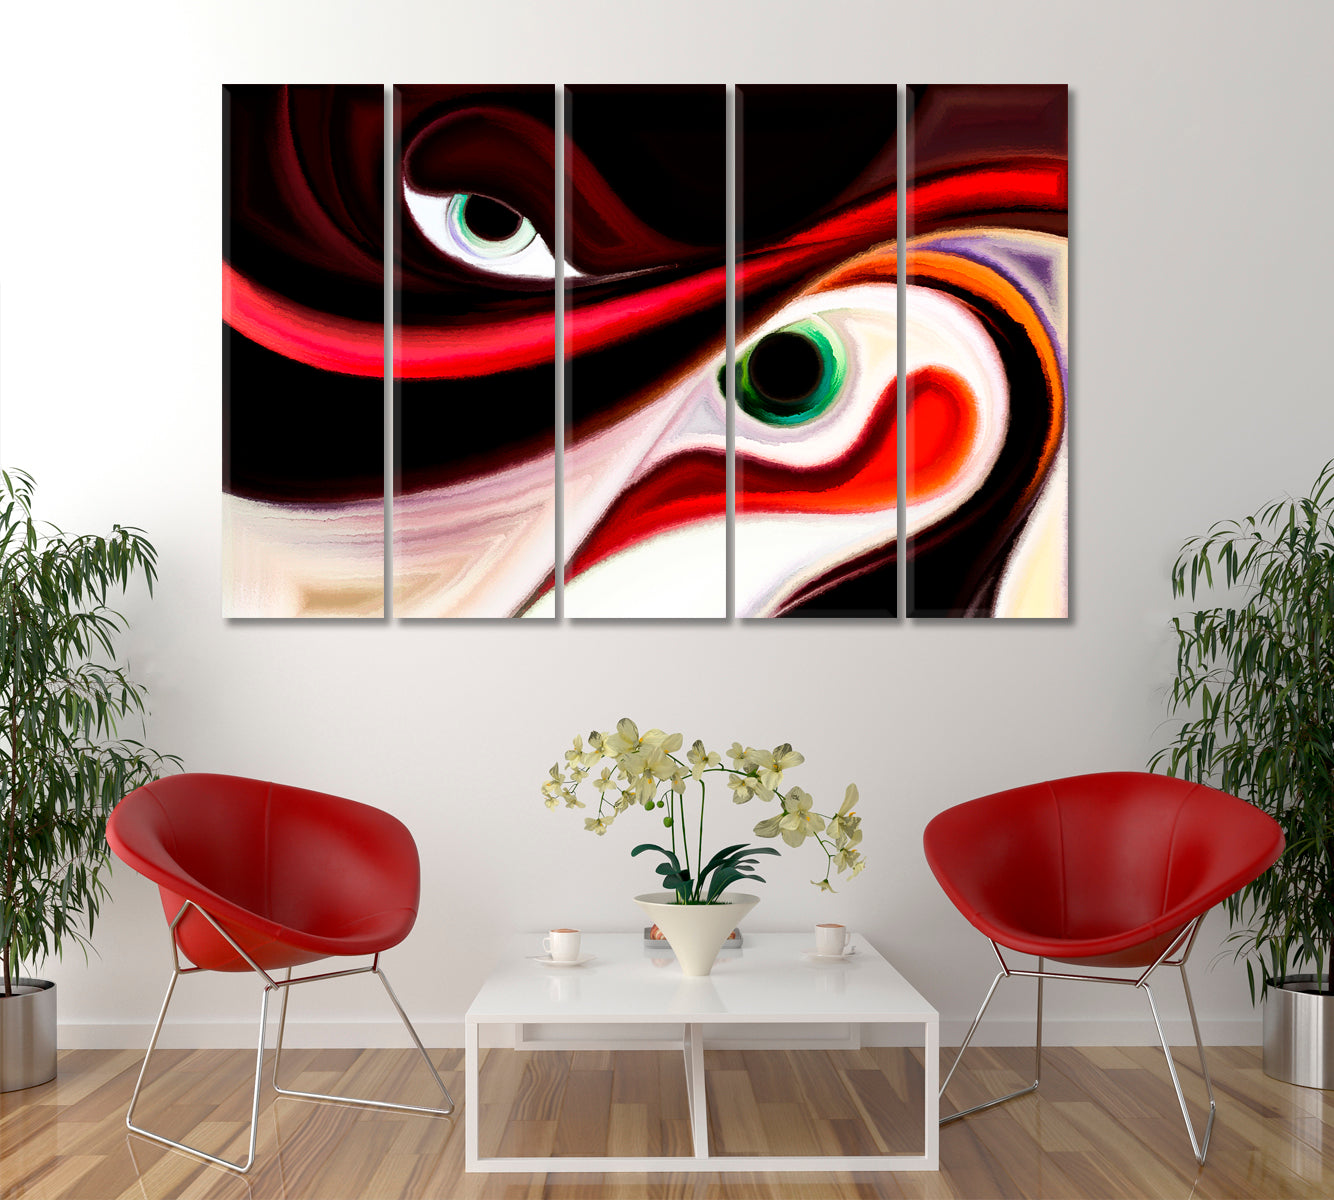 Yin Yang Vibrant Abstract Waves and Curves Imagination Design Abstract Art Print Artesty 5 panels 36" x 24" 